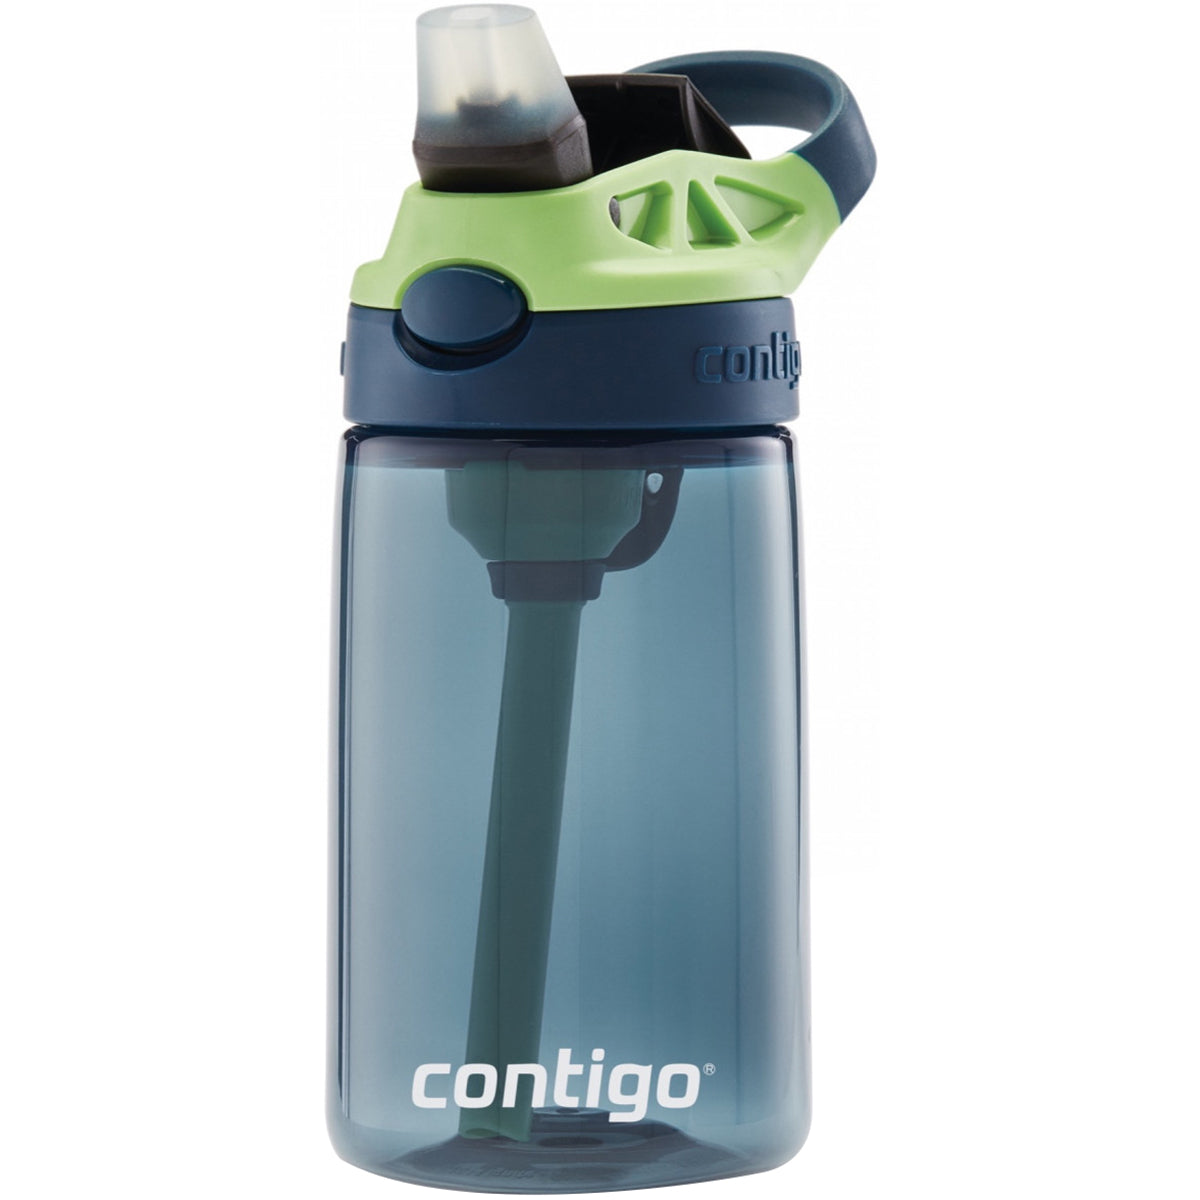 Contigo Kid's AutoSpout Straw Water Bottle with Easy-Clean Lid Contigo